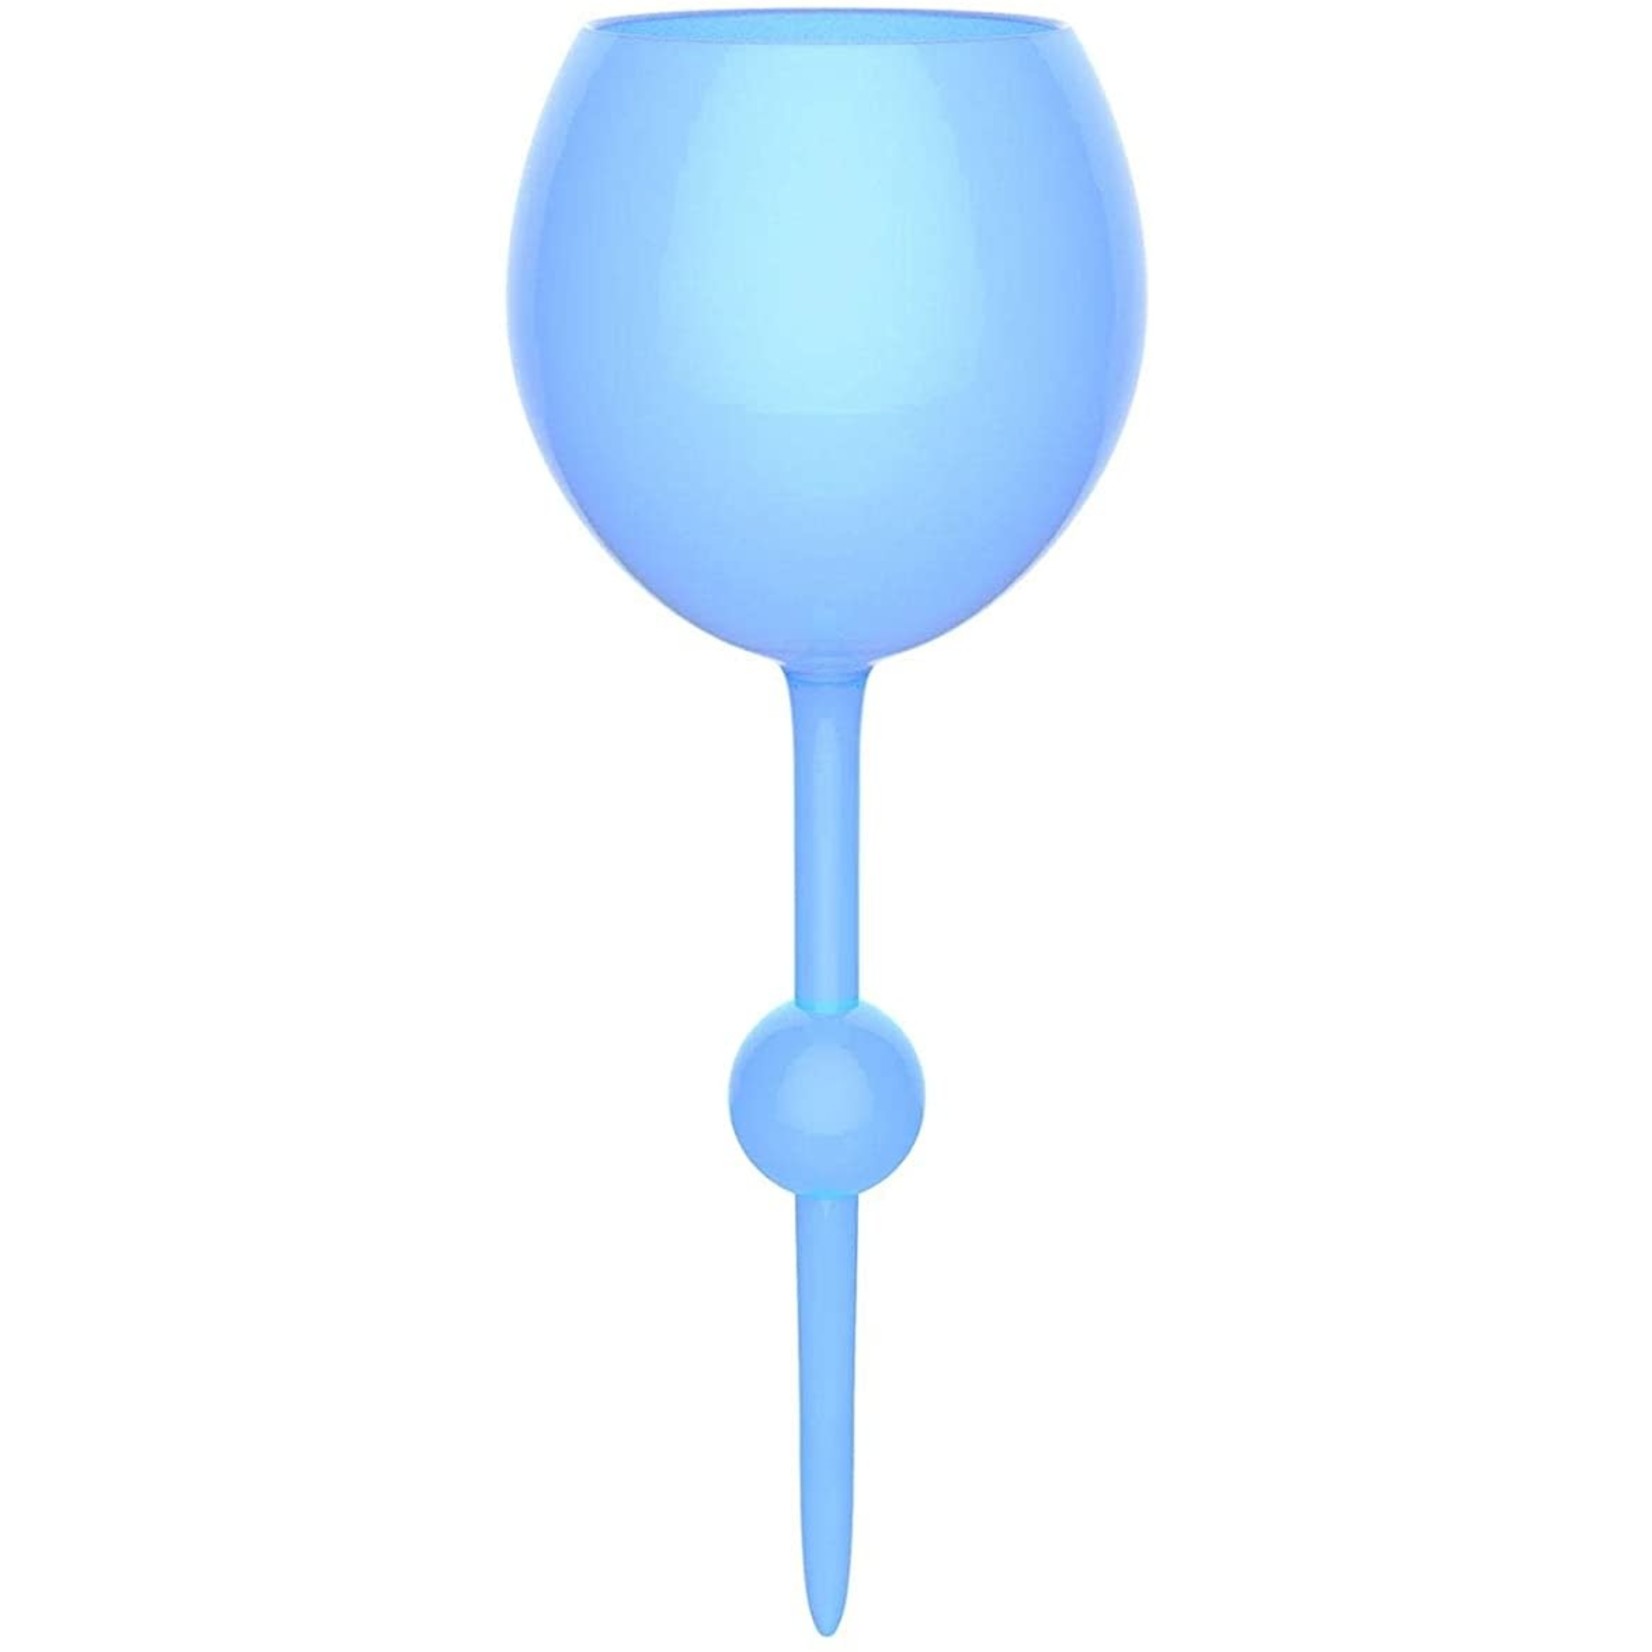 THE BEACH GLASS BEACH GLASS - FLOATING WINE GLASS - BLUE - 2 PACK